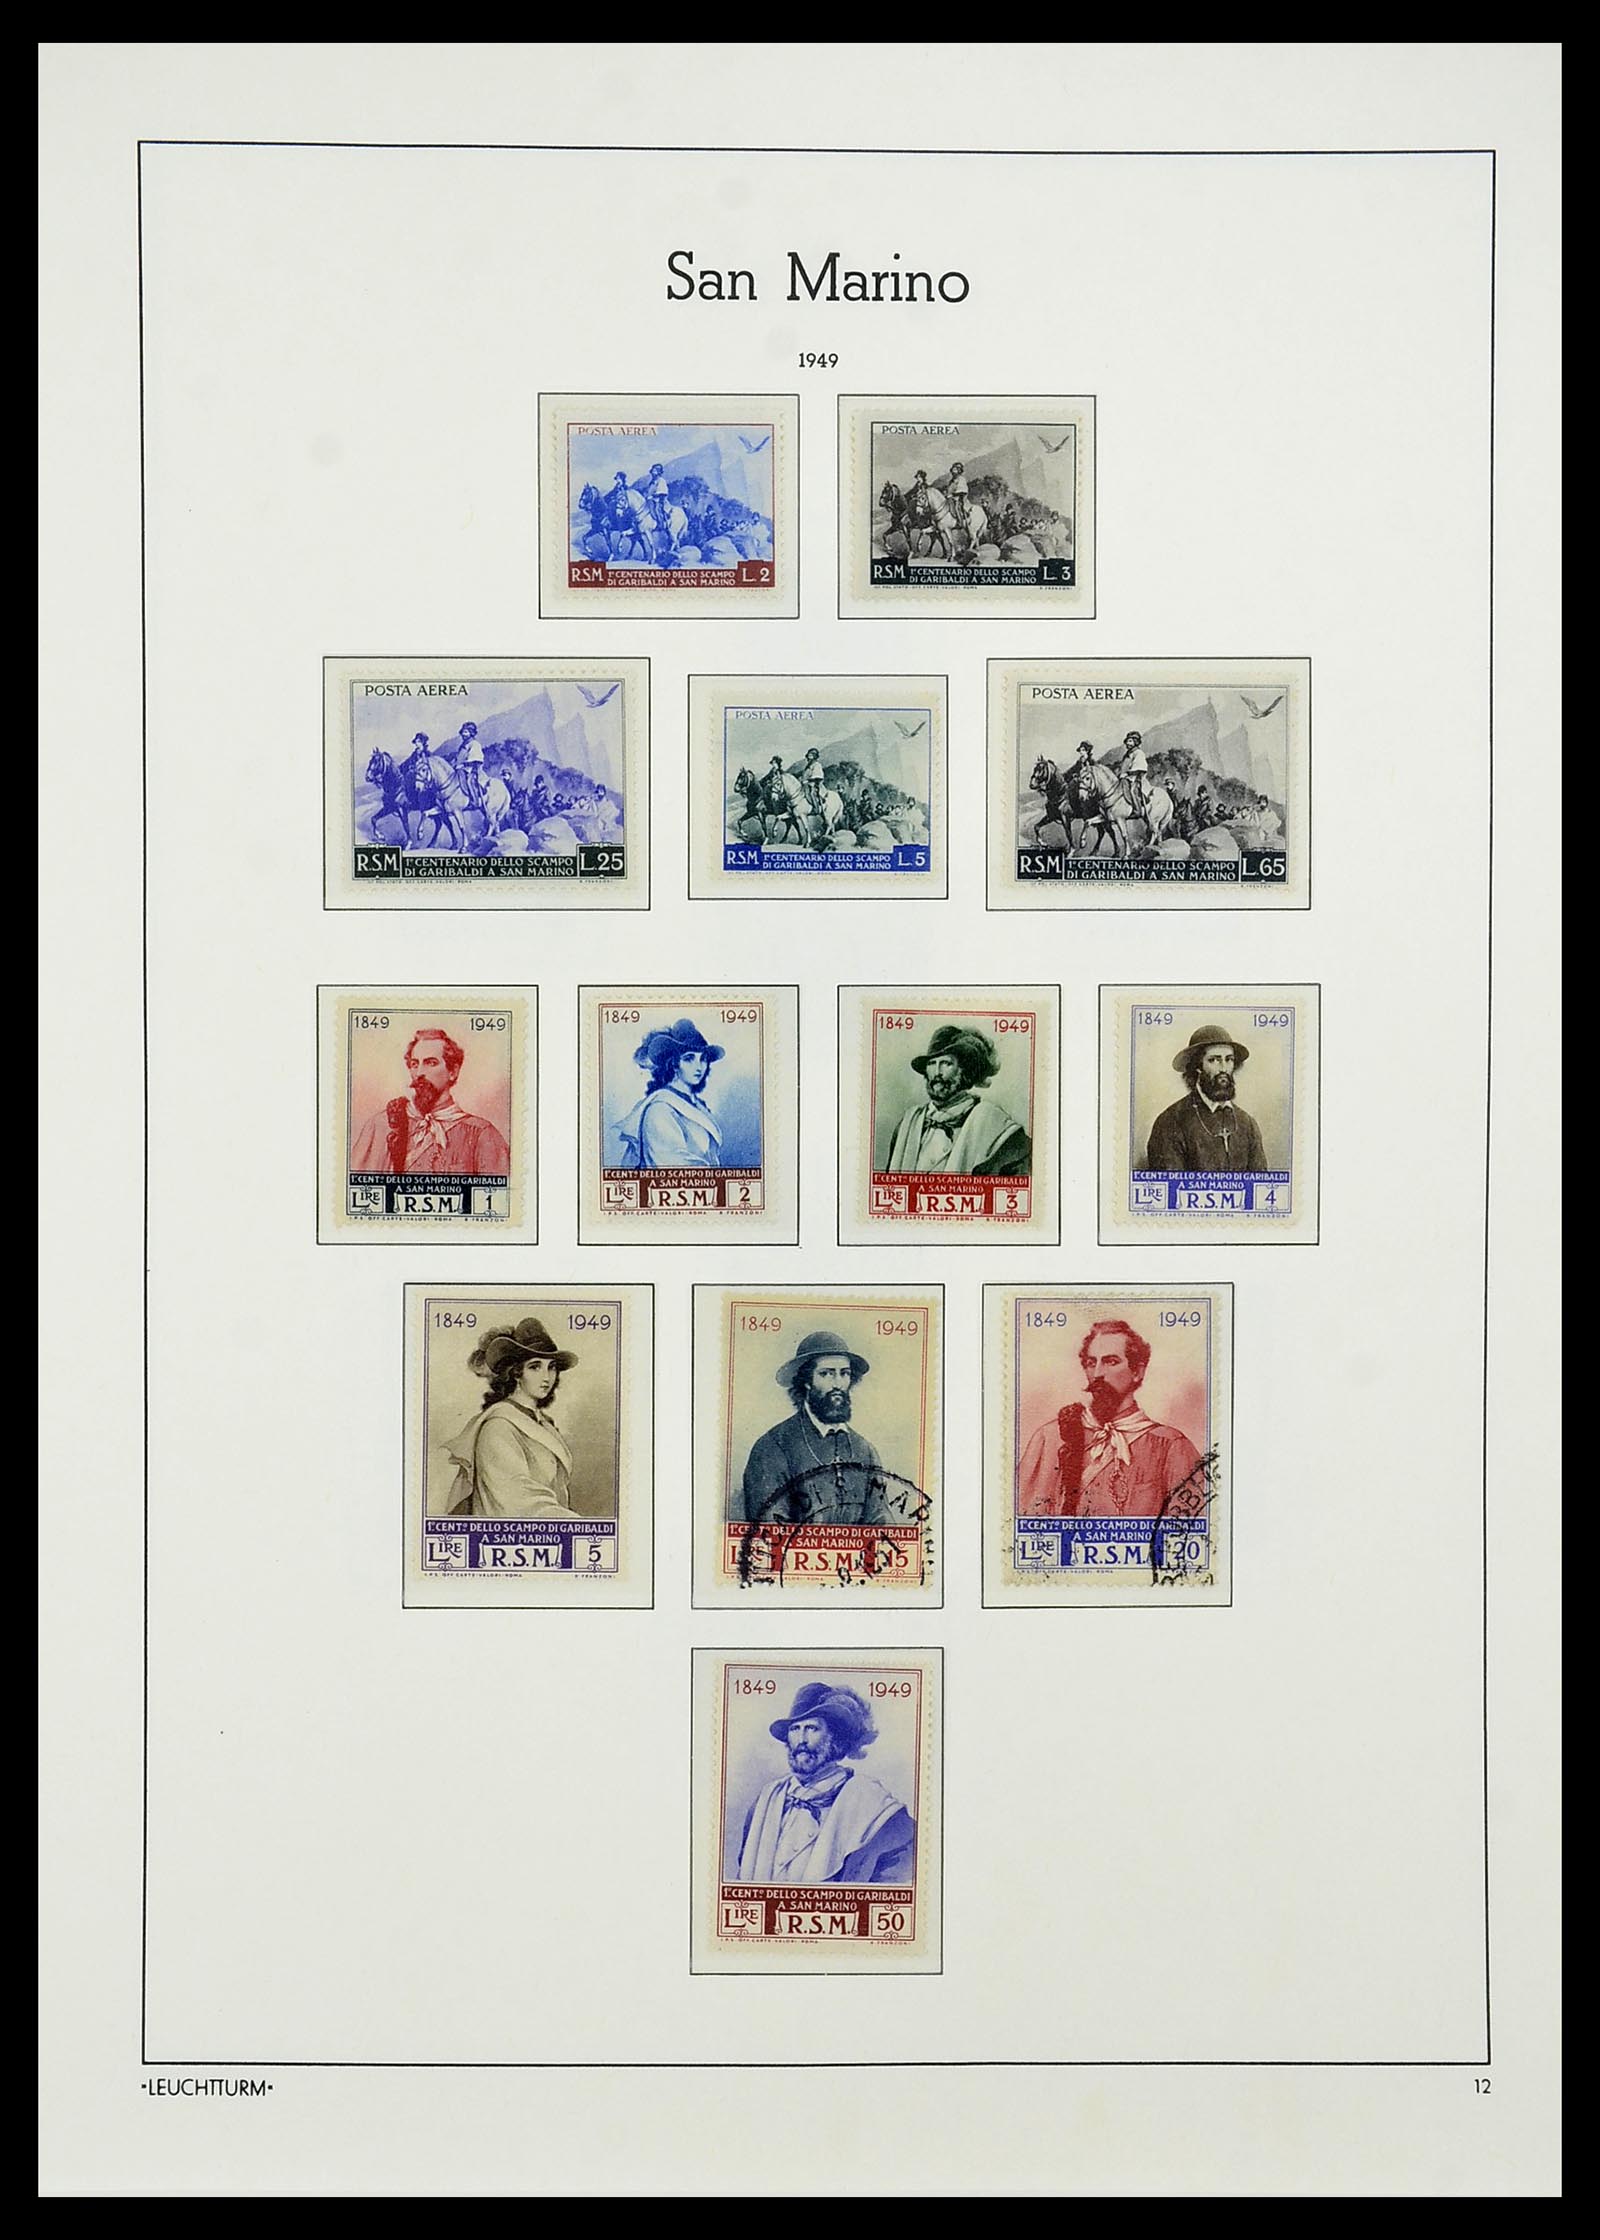 34243 046 - Stamp collection 34243 San Marino 1877-2008.